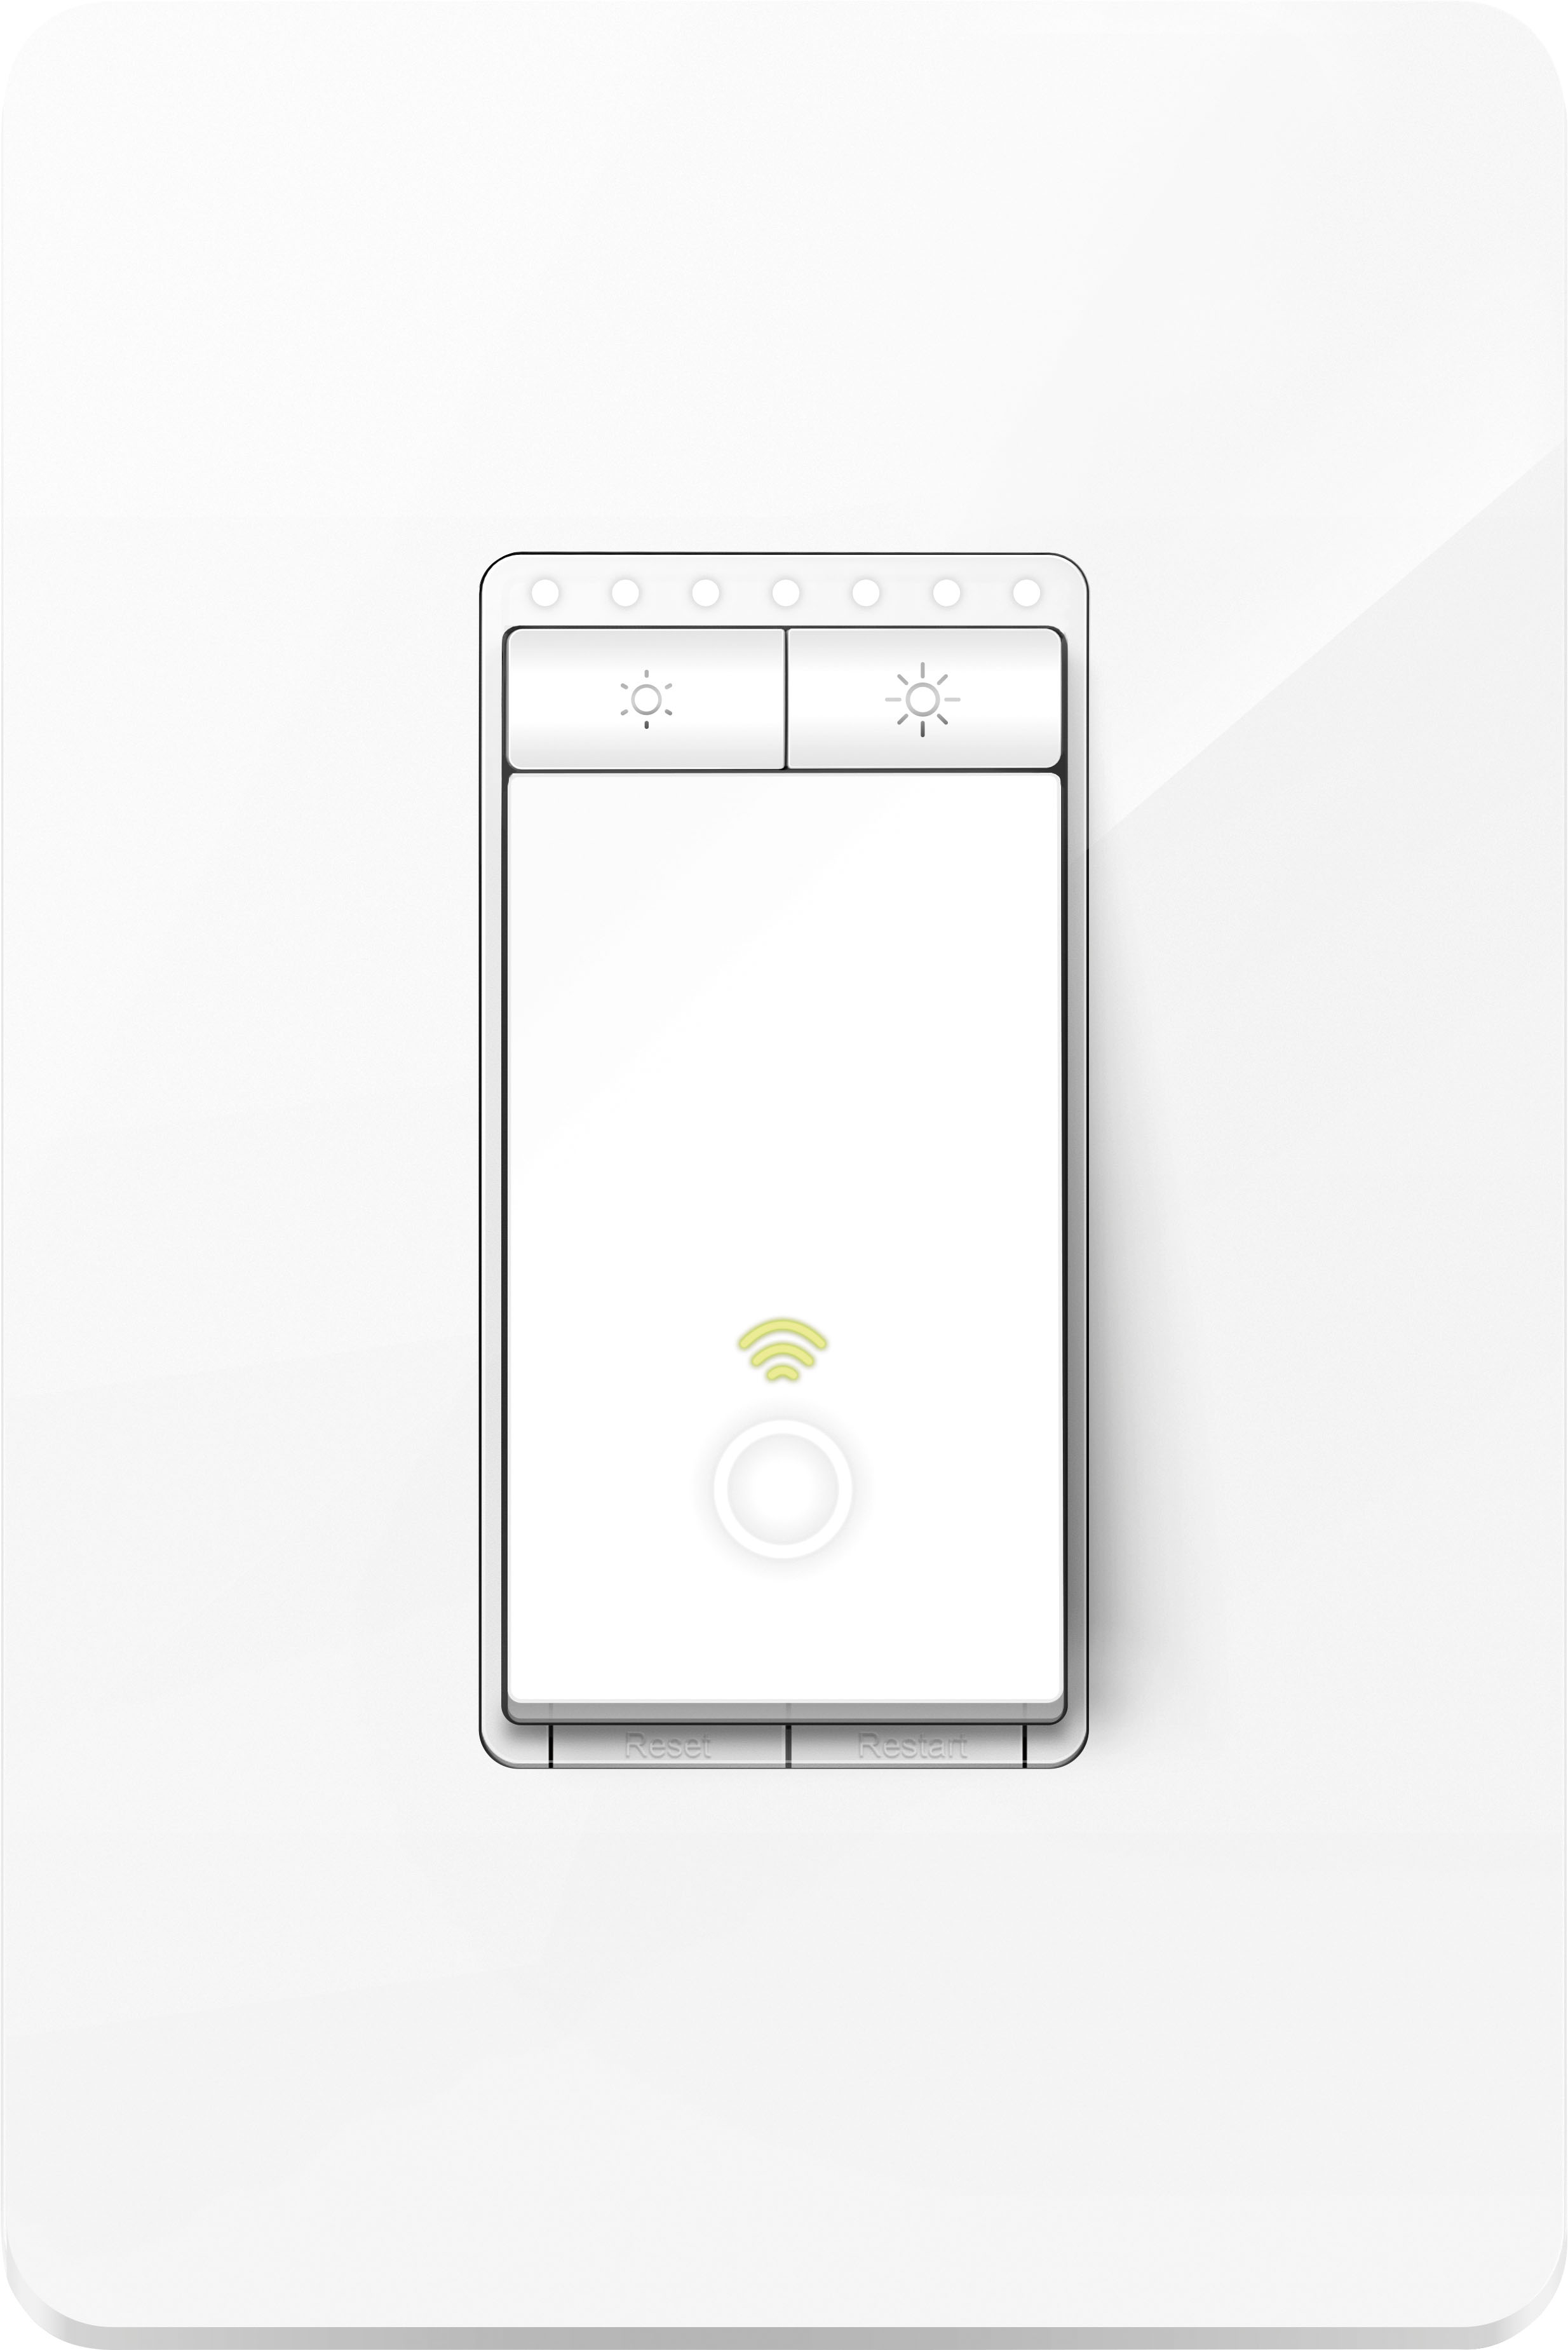 TP-Link - Kasa Wi-Fi Smart Light Switch / Dimmer - White